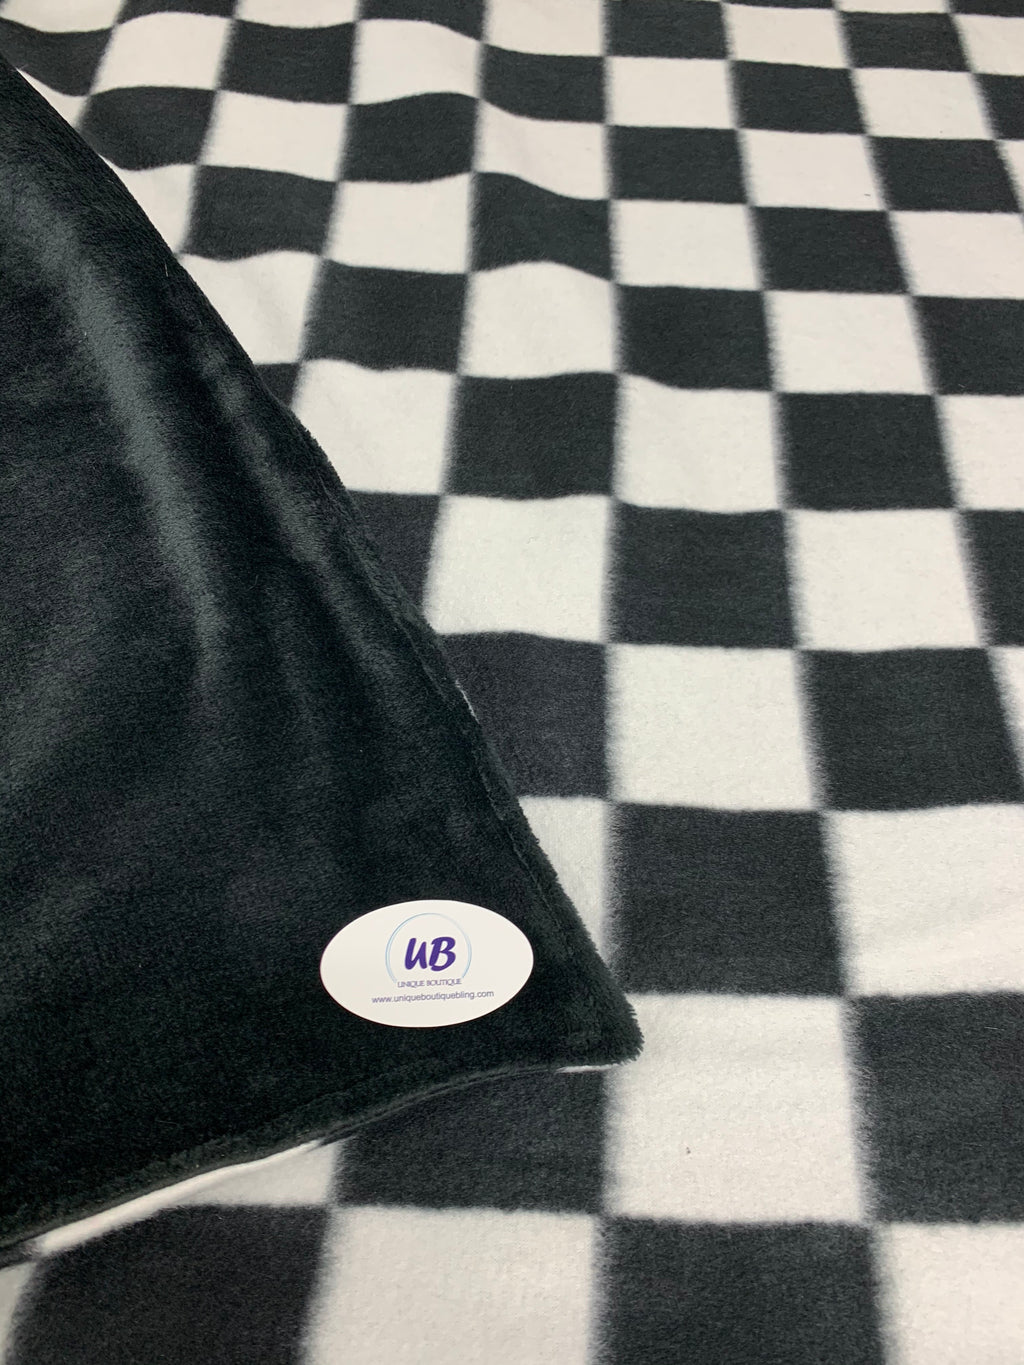 Checkered Black & White Blanket with Minky Plush Backing